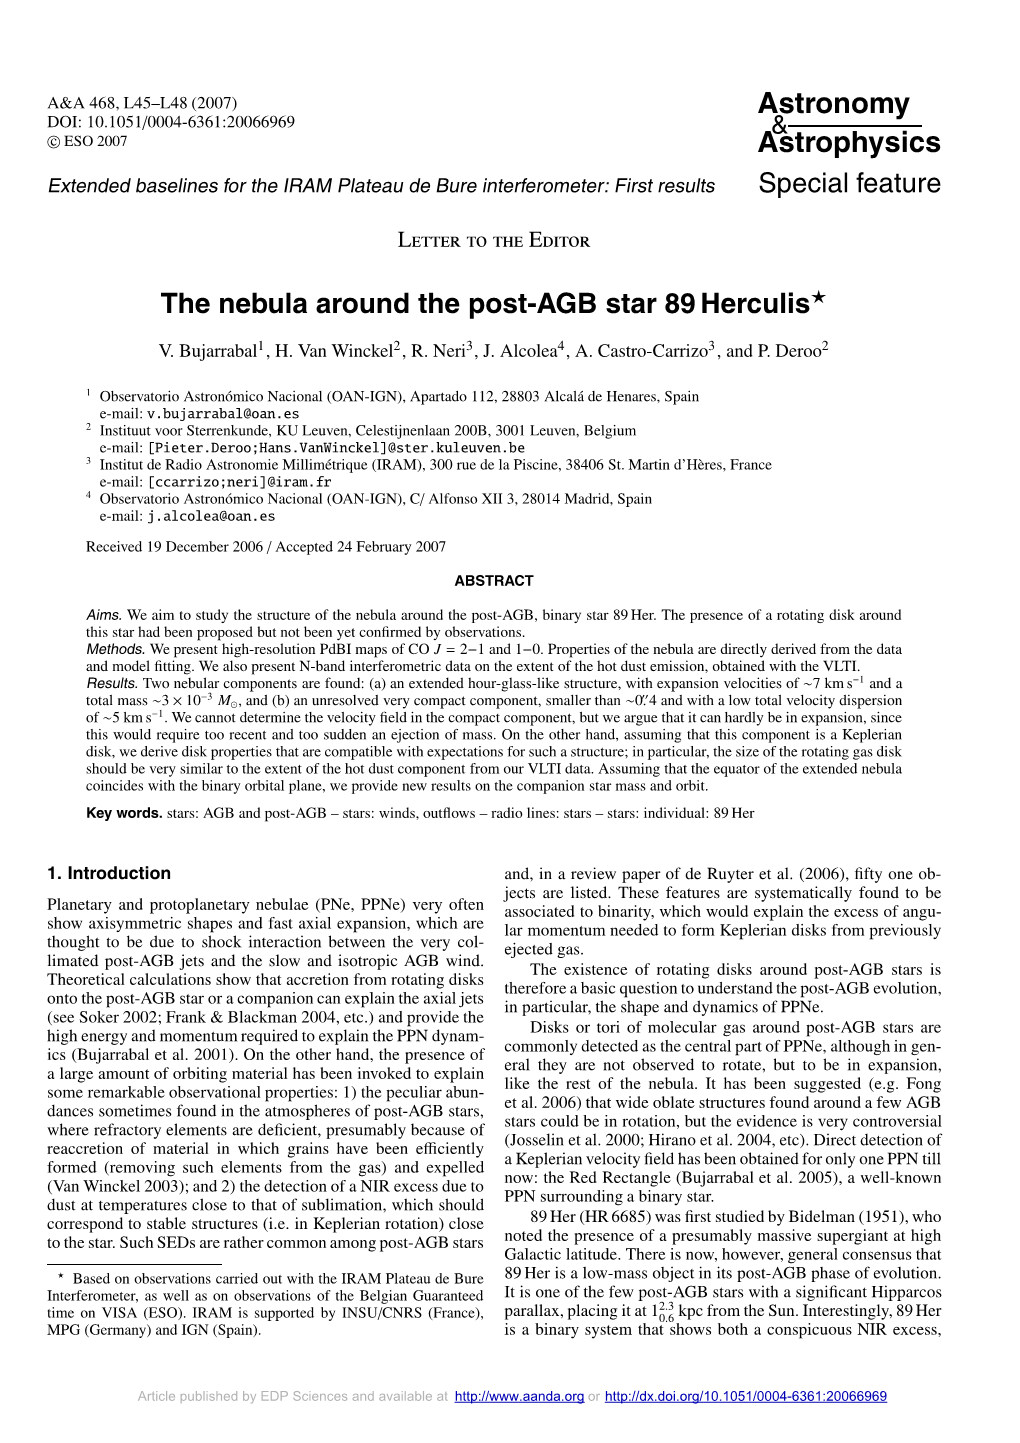 The Nebula Around the Post-AGB Star 89 Herculis